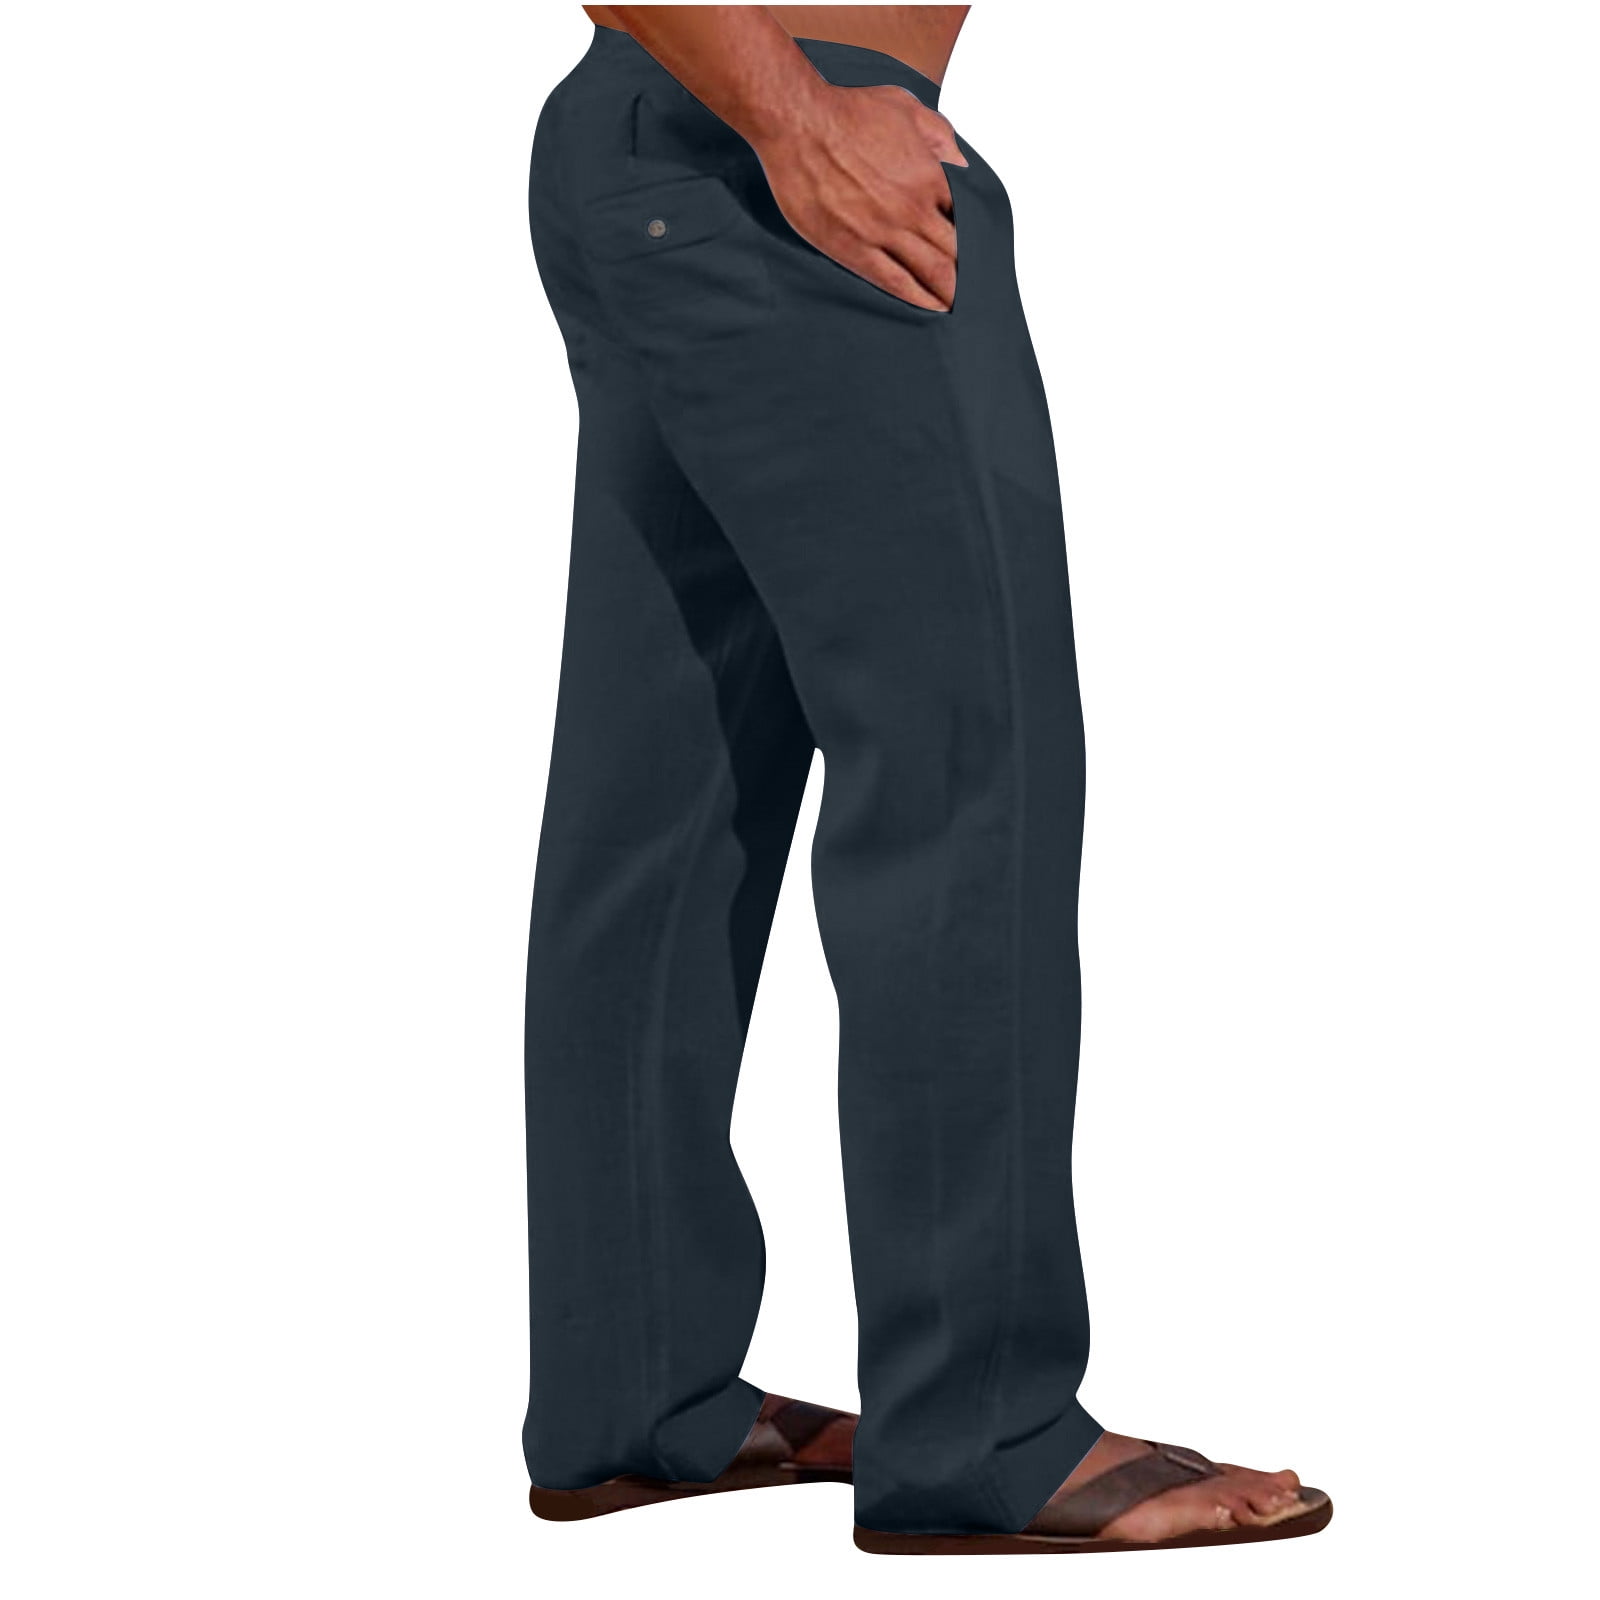 Oalirro Navy Tactical Pants Drawstring Men's Sweatpants Cotton